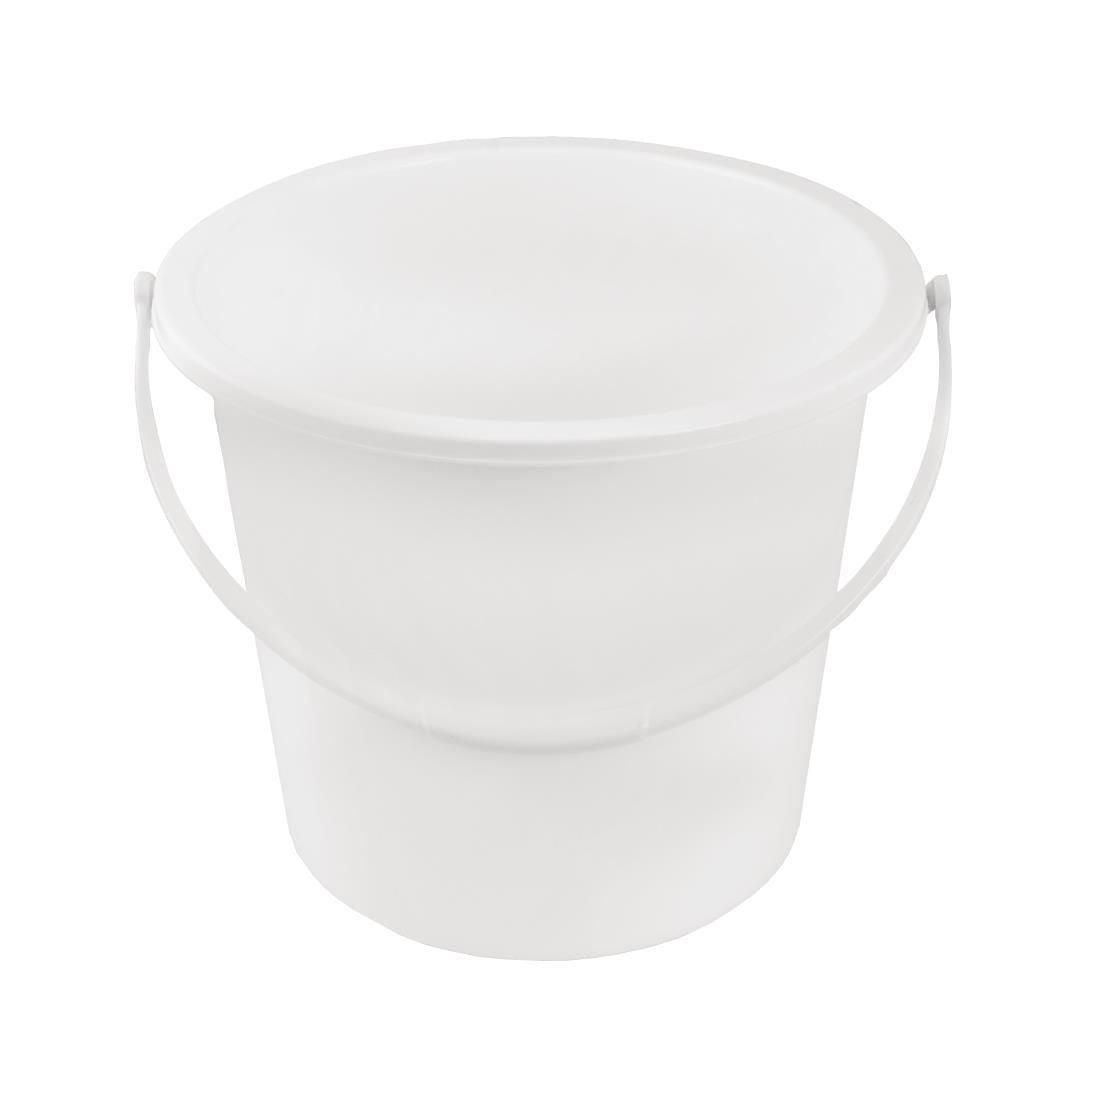 Jantex Round Plastic Bucket White 10Ltr JD Catering Equipment Solutions Ltd